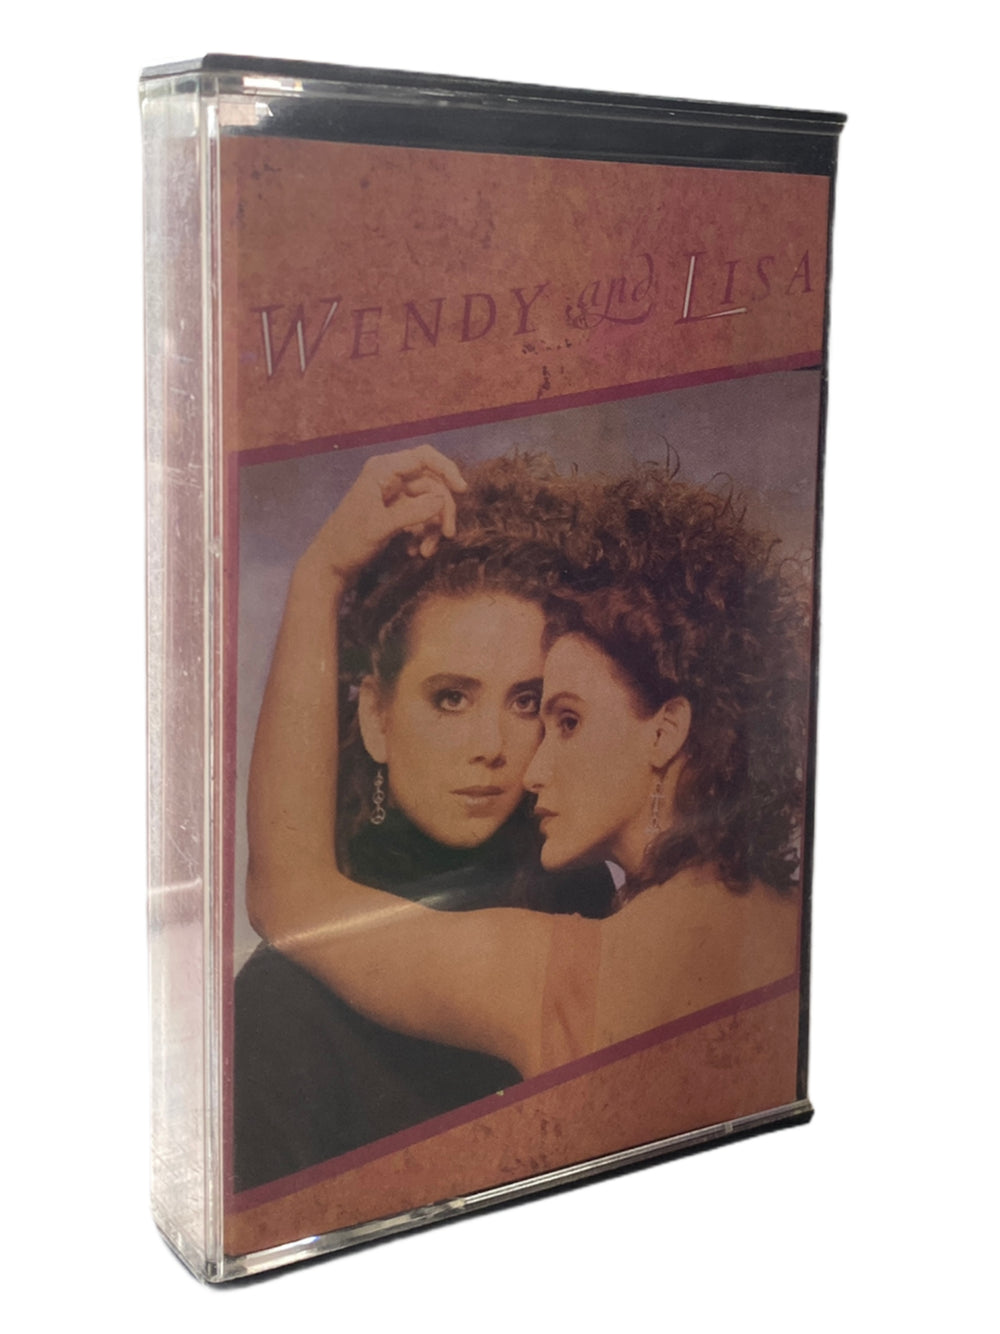 Prince – Wendy & Lisa Self Titled Tape Cassette Album 1987 Original 11 Track Prince